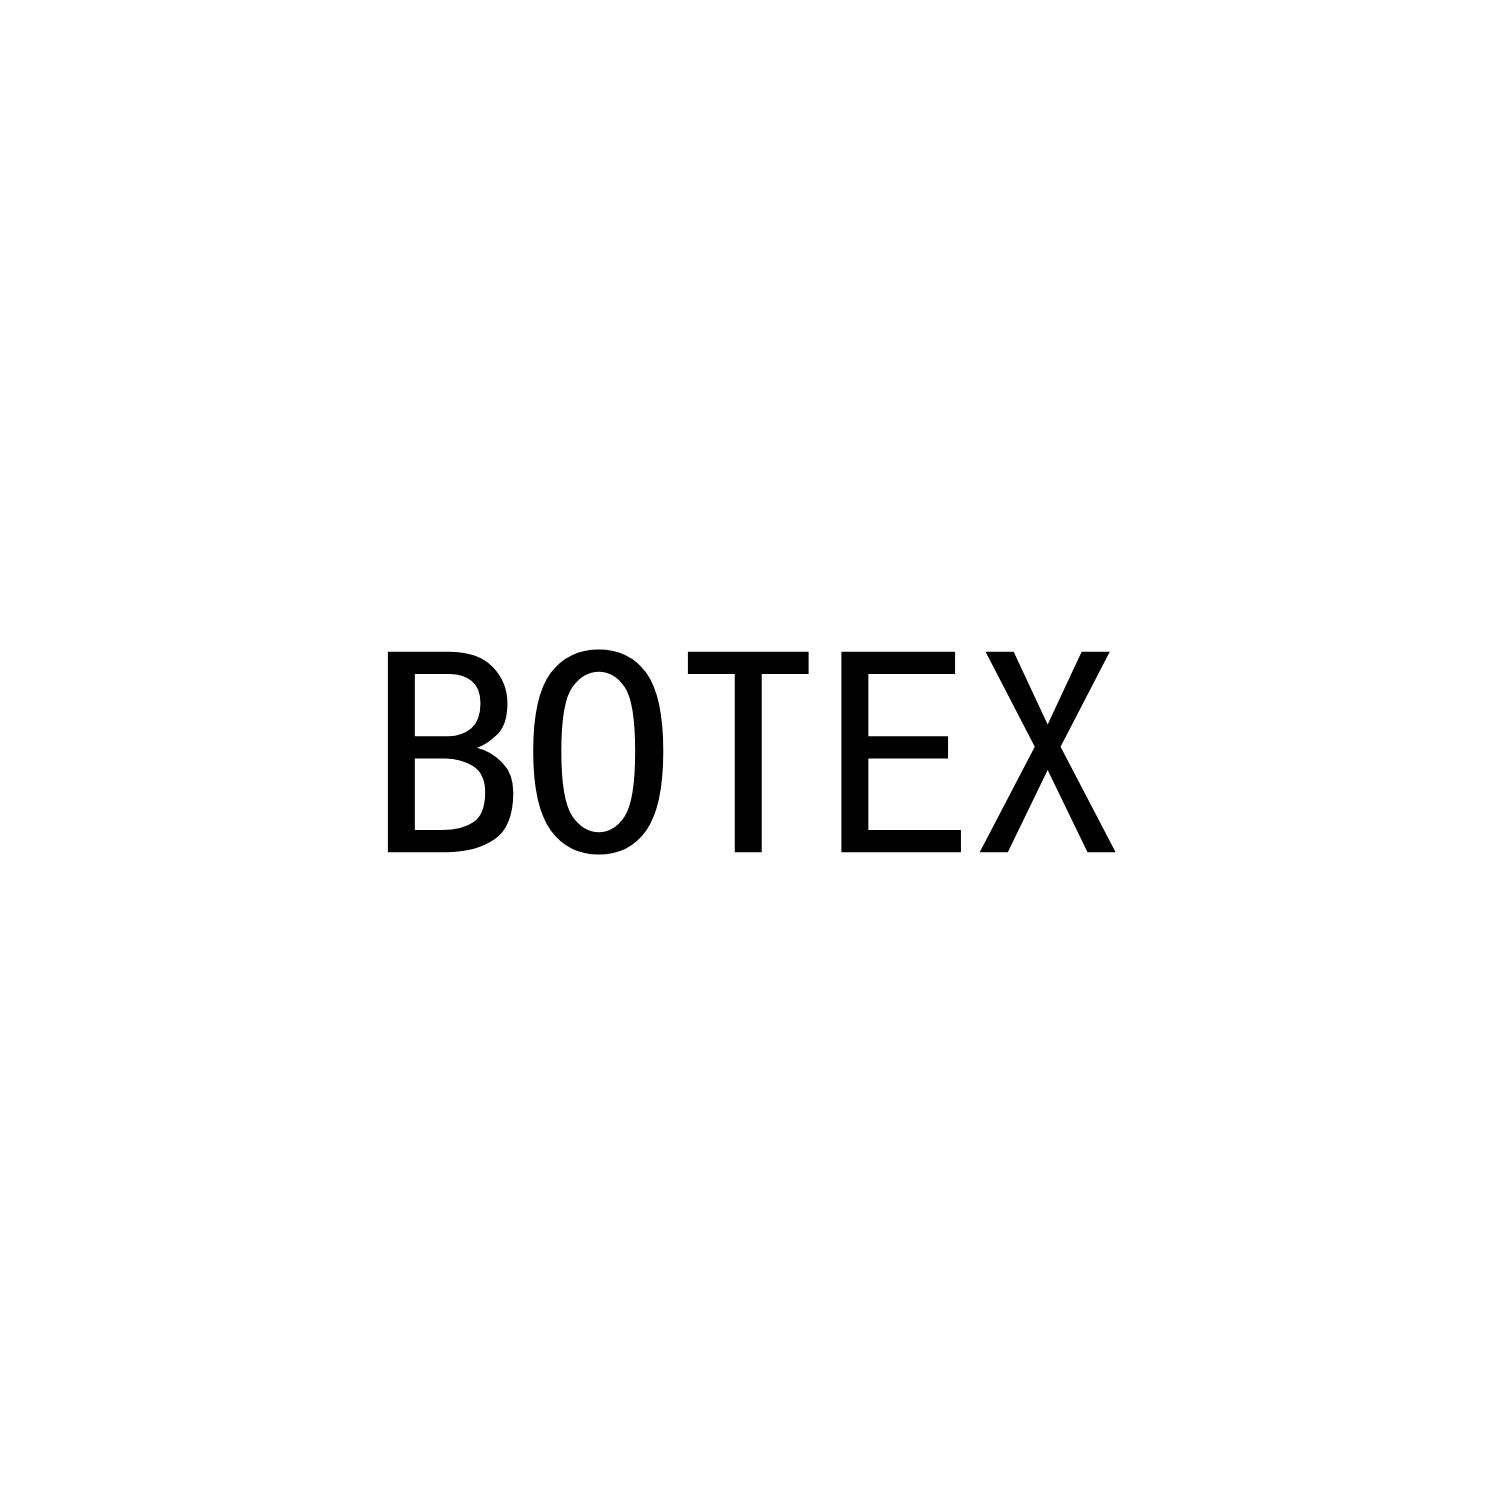 BOTEX